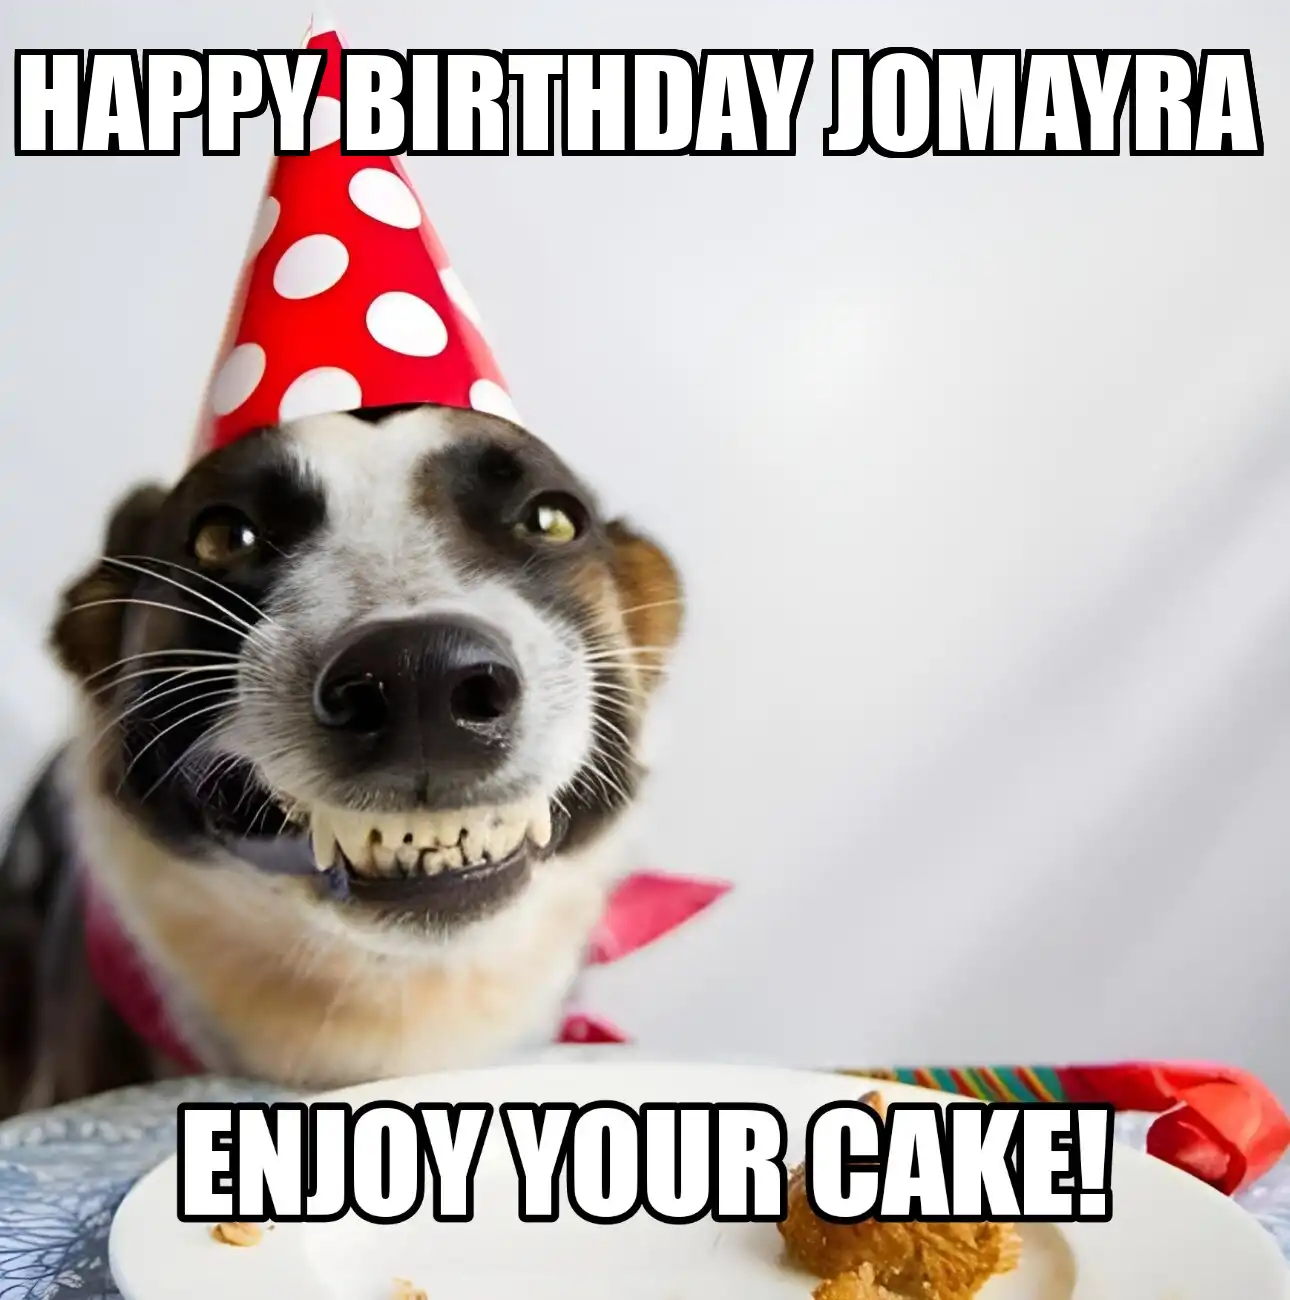 Happy Birthday Jomayra Enjoy Your Cake Dog Meme